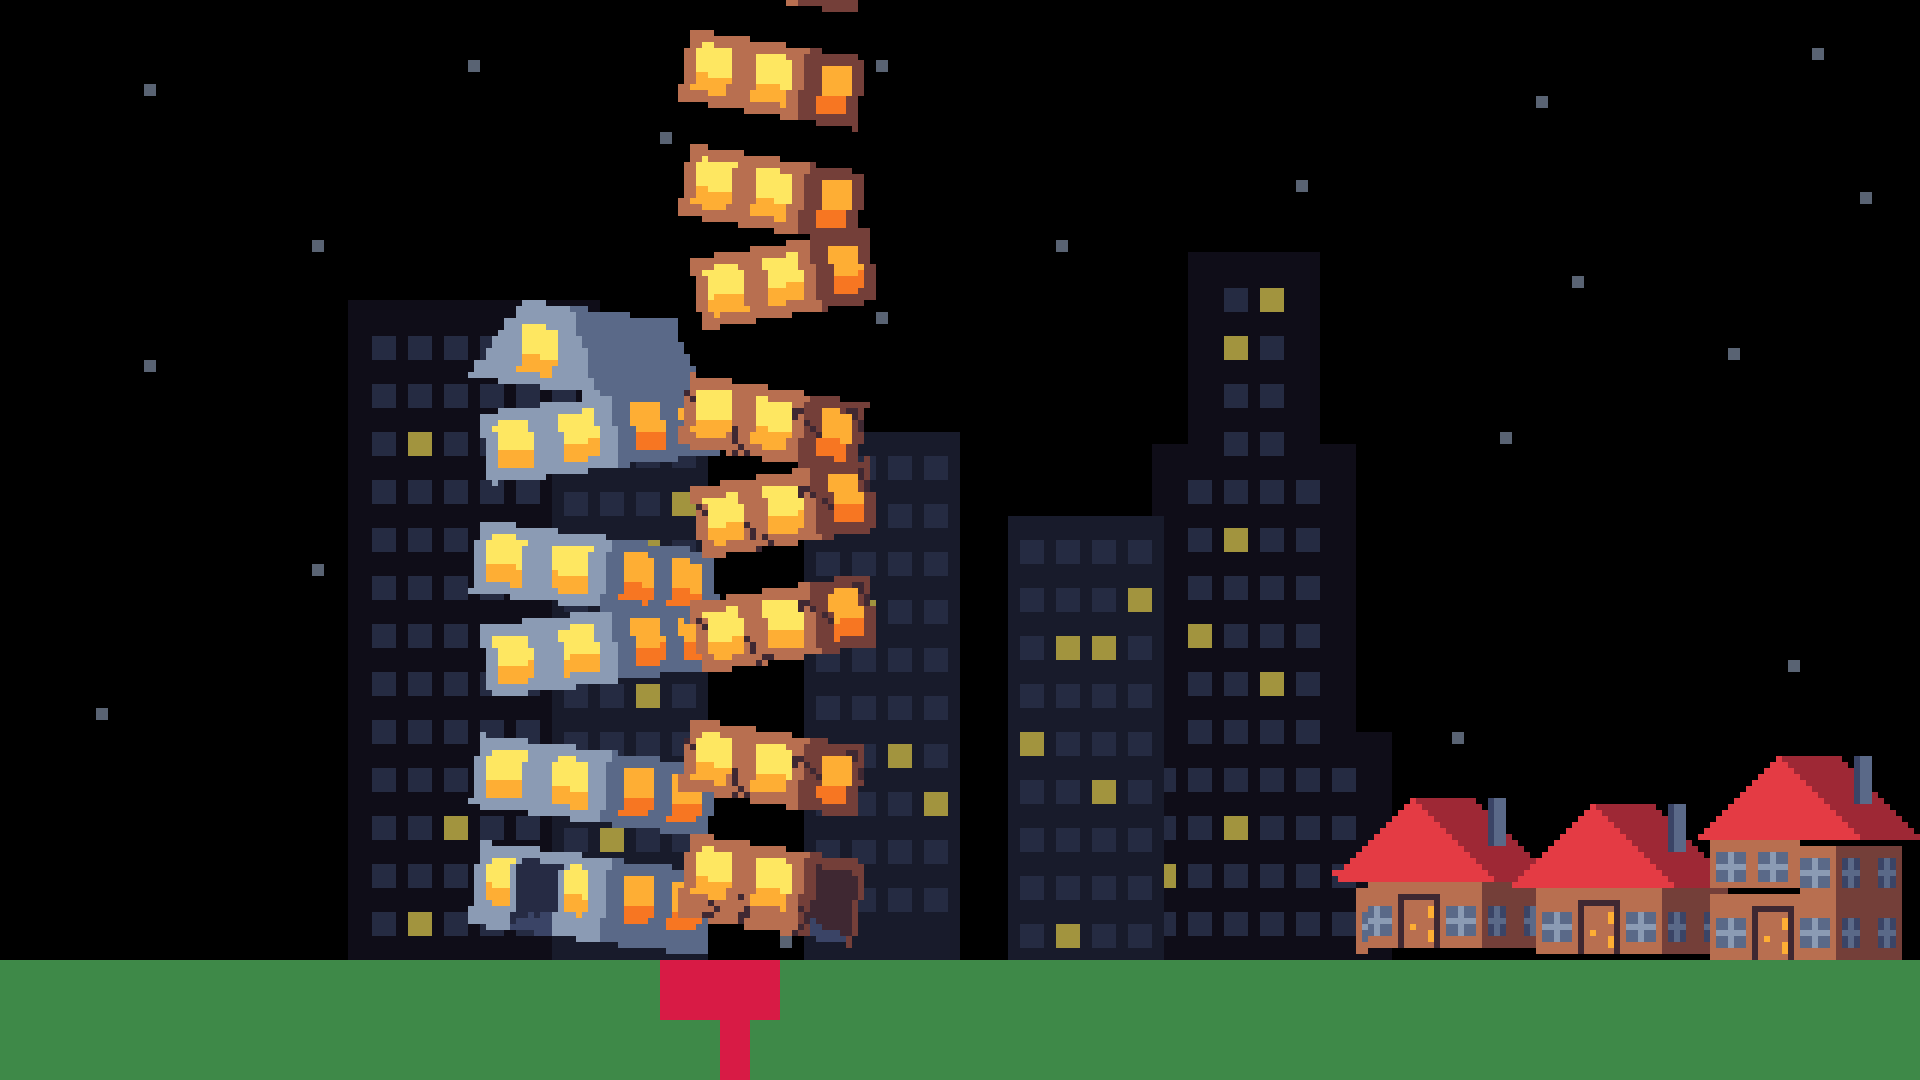 Pixel art of buildings against a night sky.